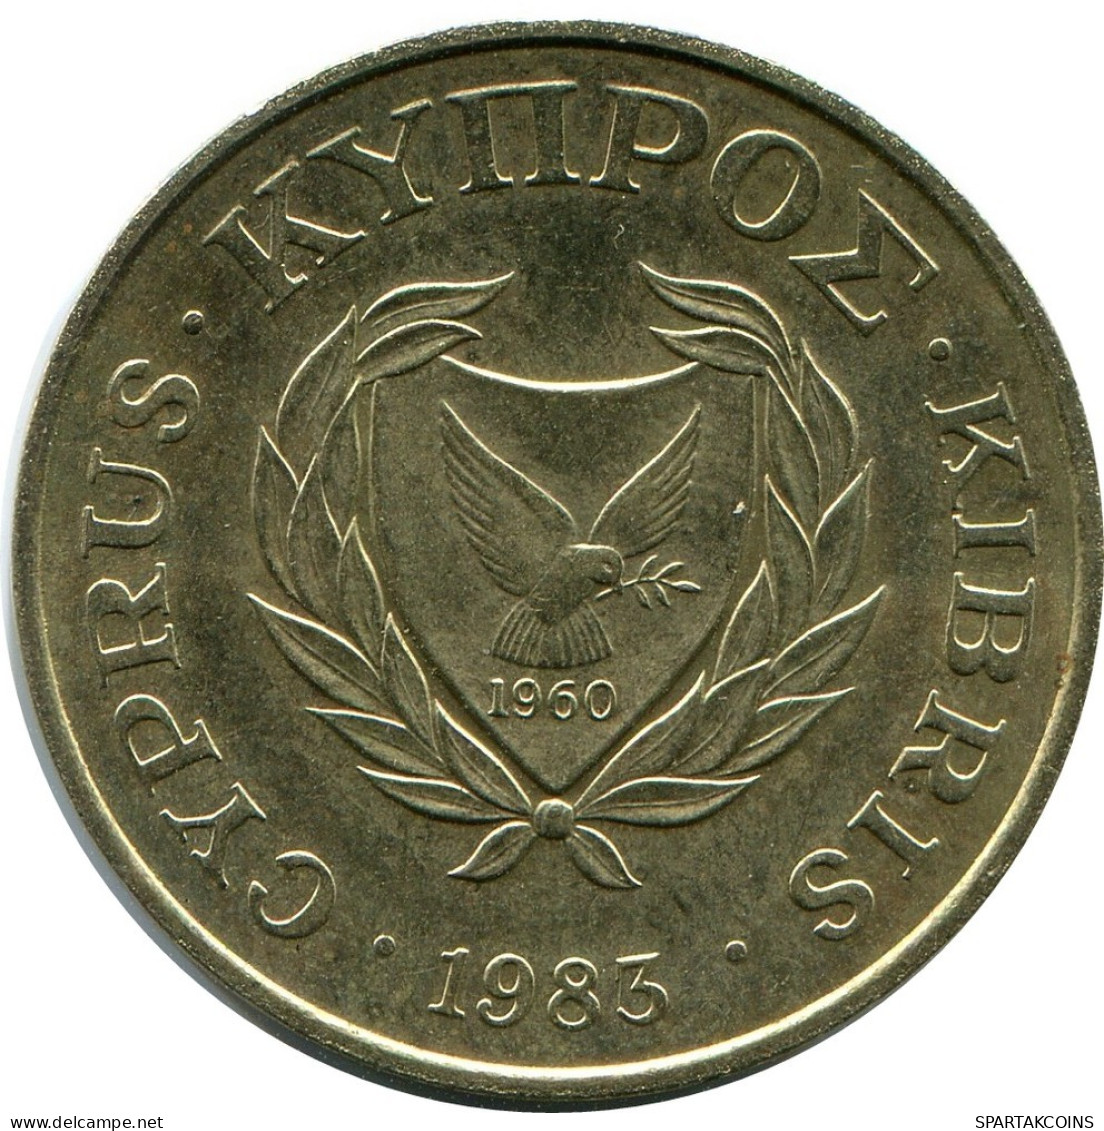 5 CENTS 1983 CYPRUS Coin #AP309.U.A - Cyprus